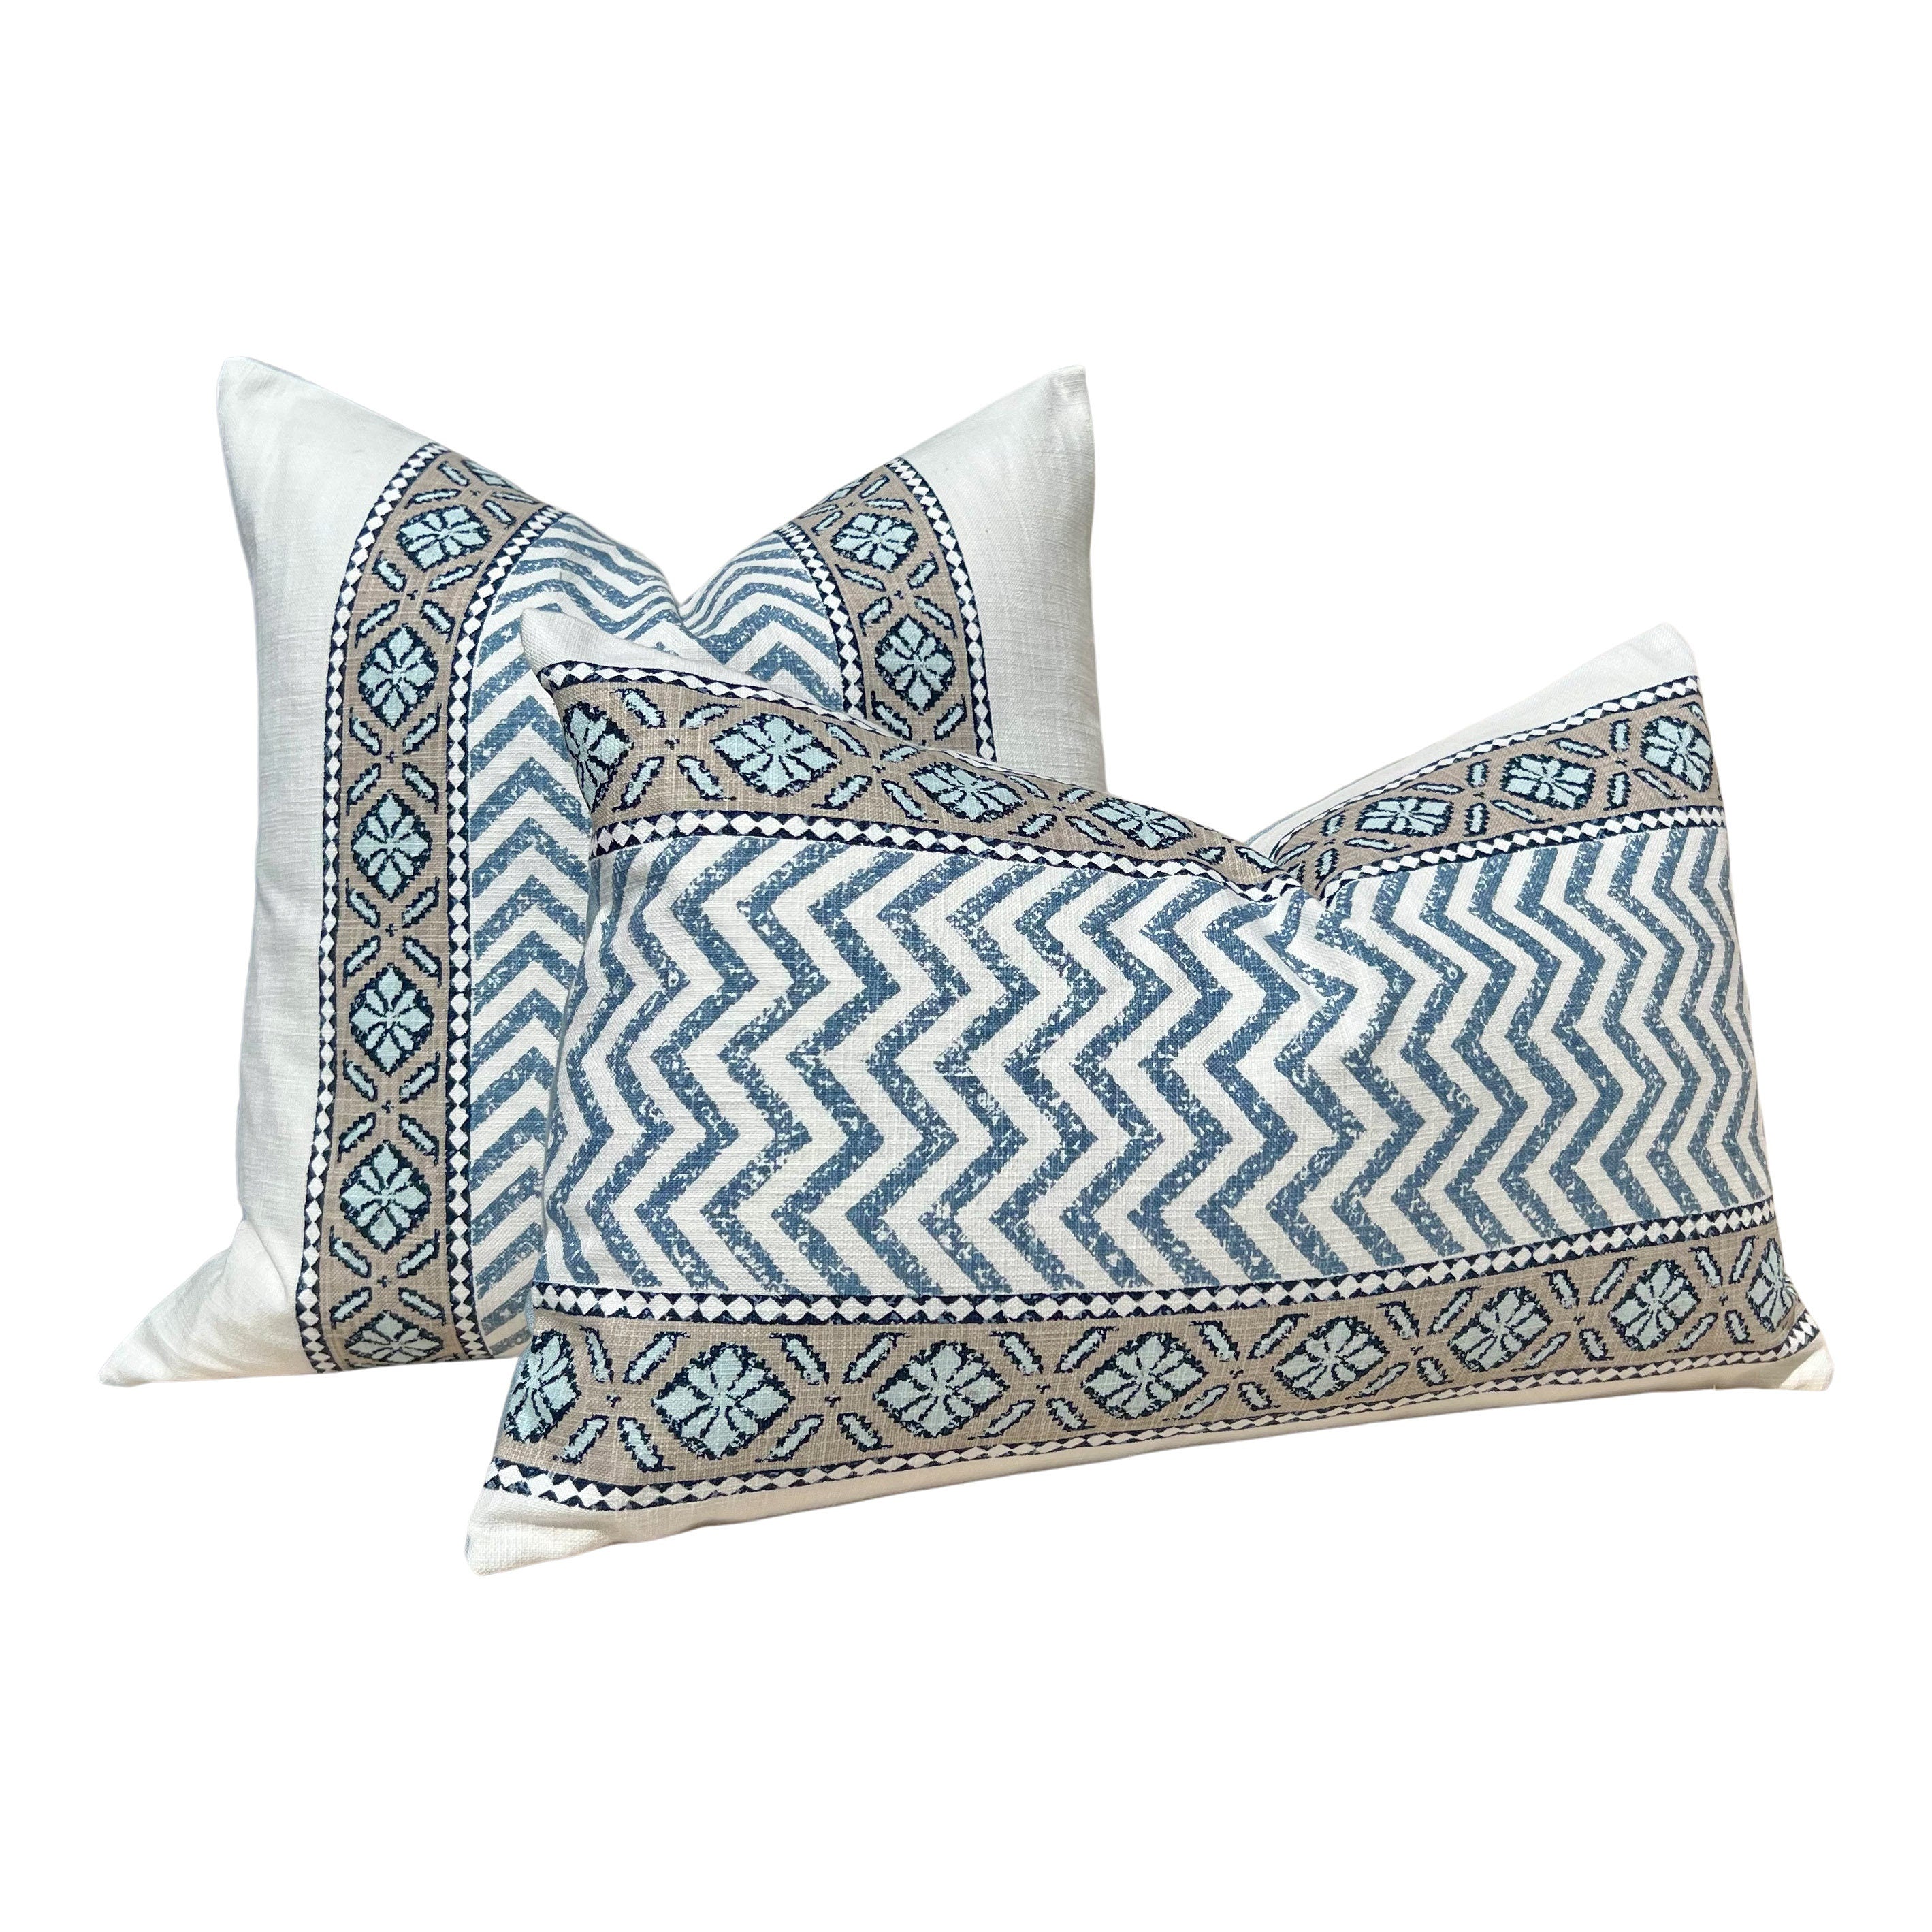 Designer Striped Pillow in Aqua Blue. Chevron Blue White Pillow, Zig Zag Lumbar Pillow, Euro Sham Cushion, Blue and White Slipcover